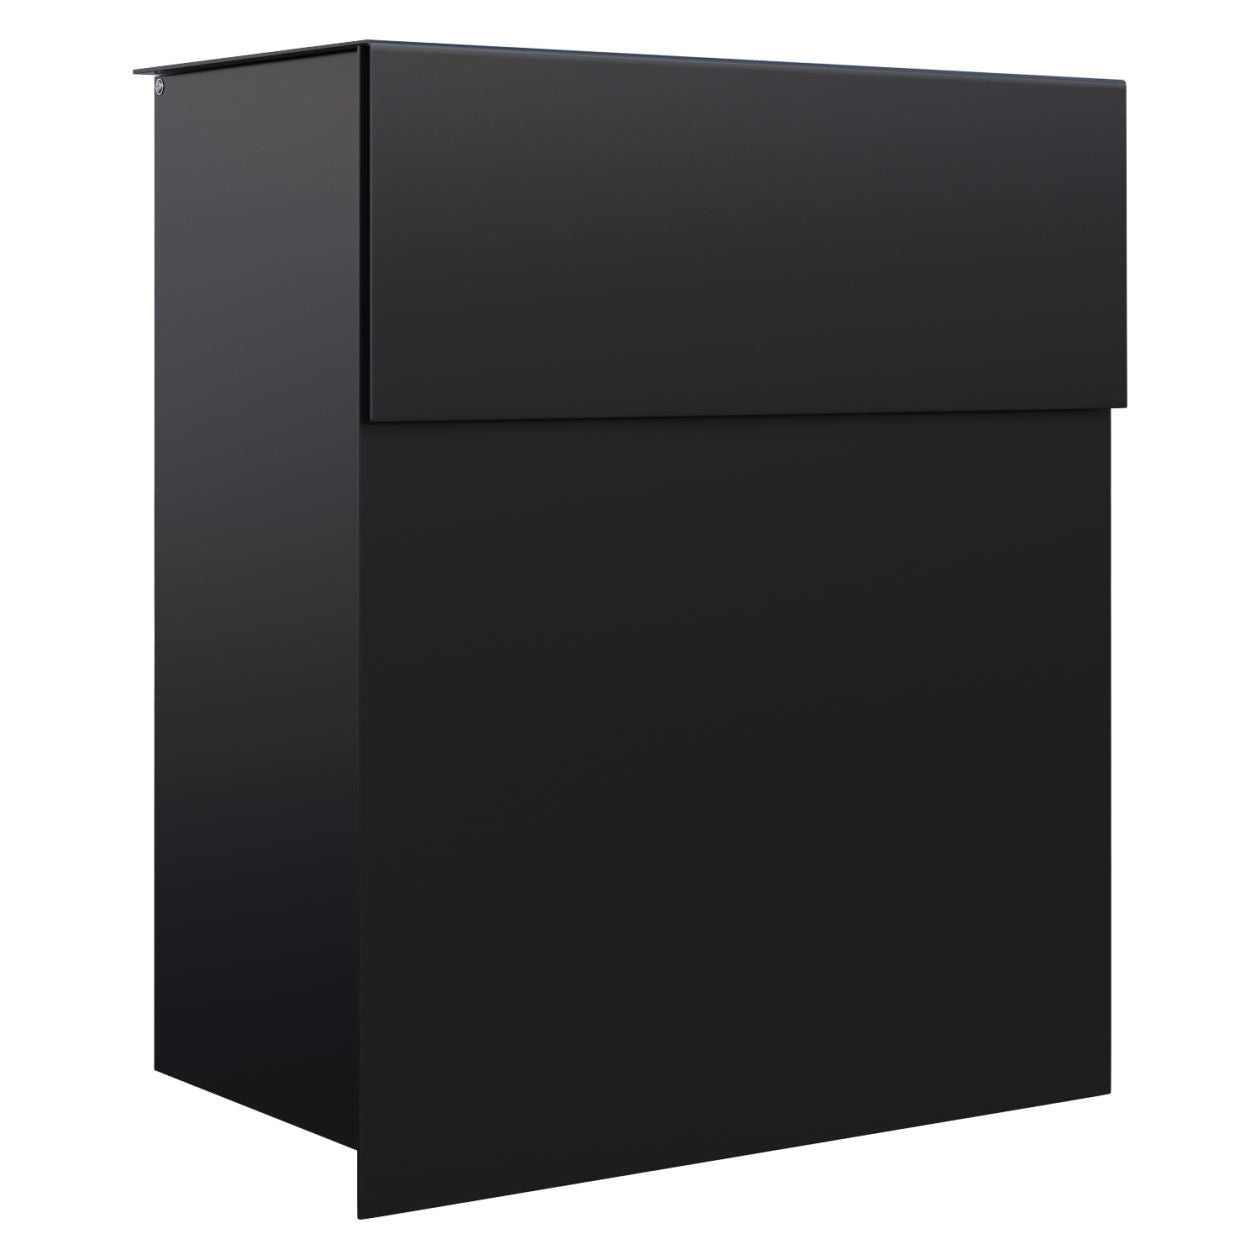 ALTO by Bravios - Modern wall-mounted black mailbox